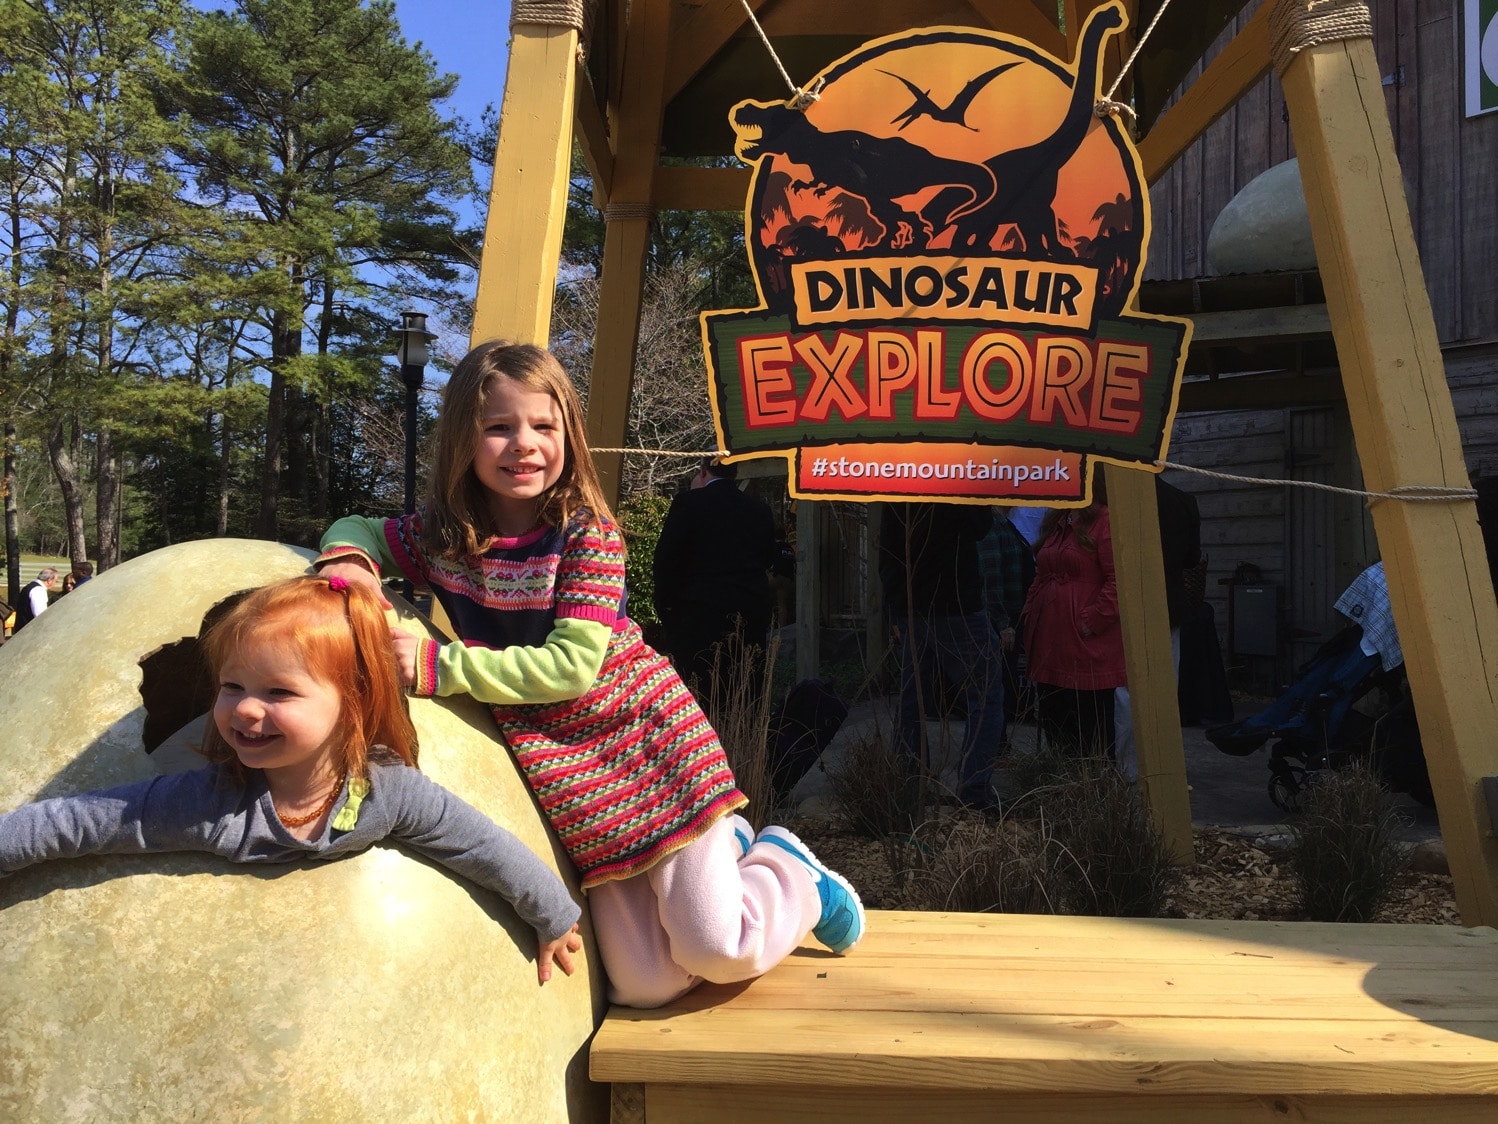 Dinosaur Explore at Stone Mountain